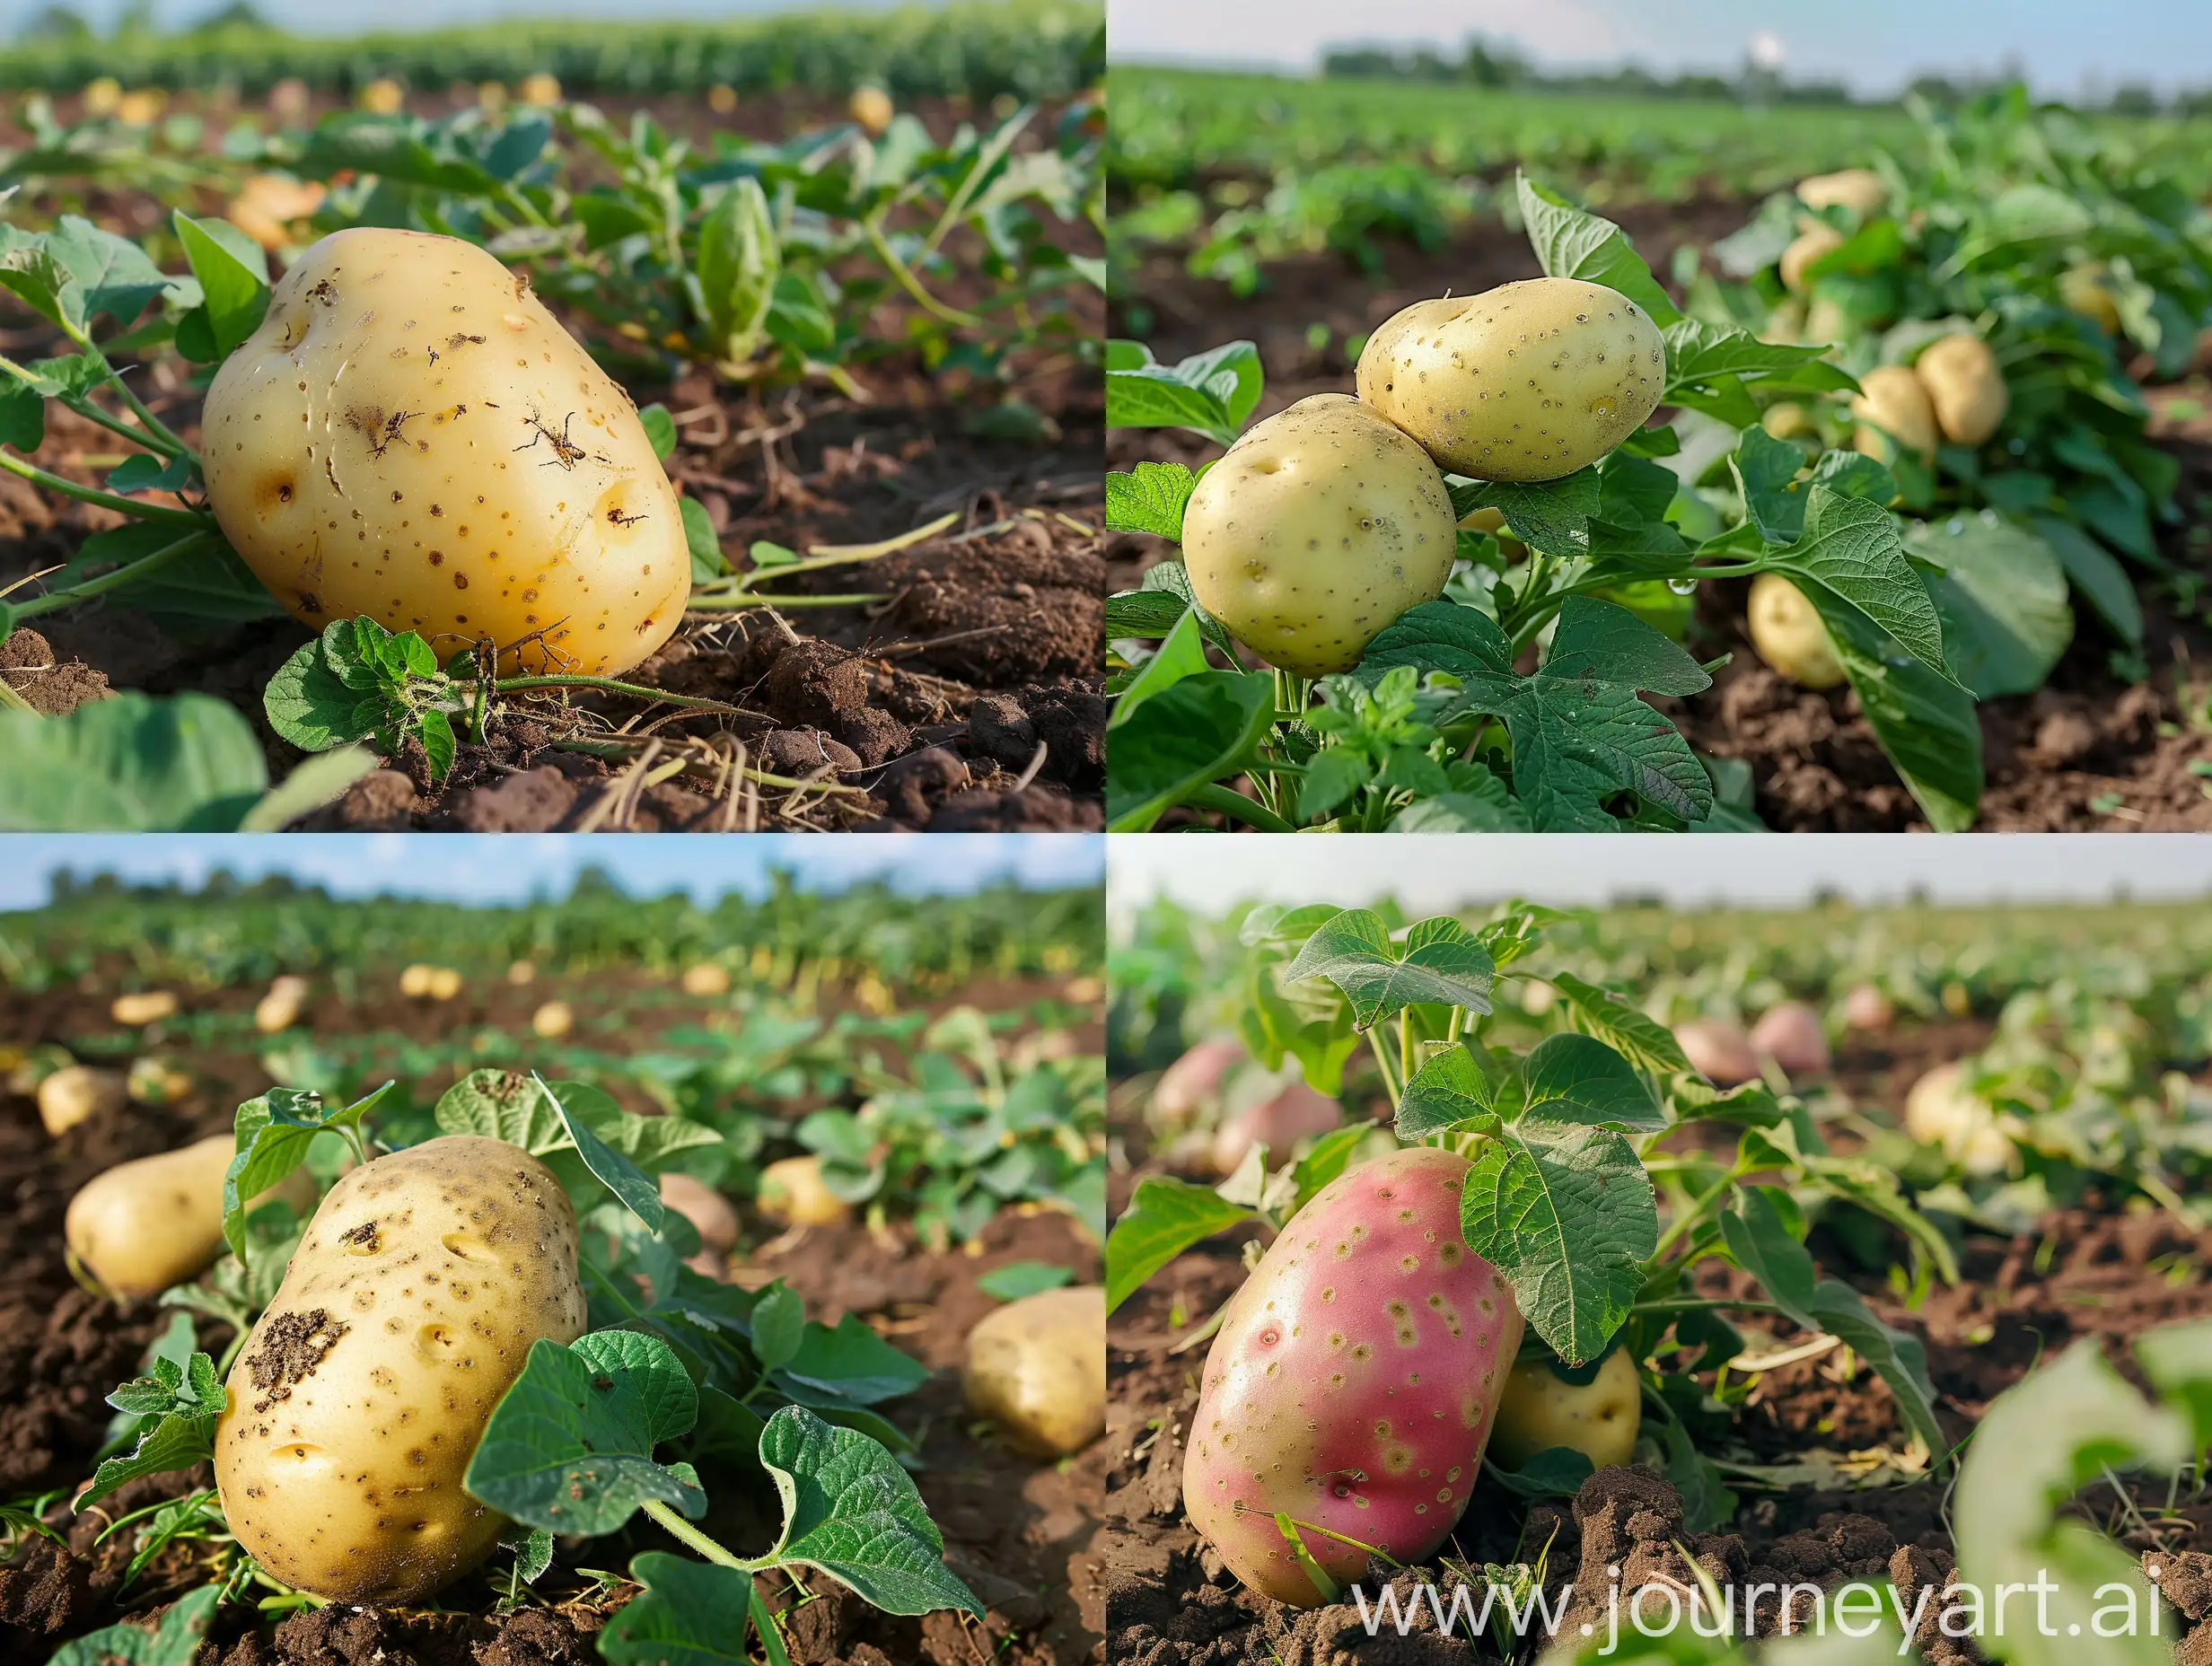 Rural-Potato-Growth-Scene-in-a-Lush-Field